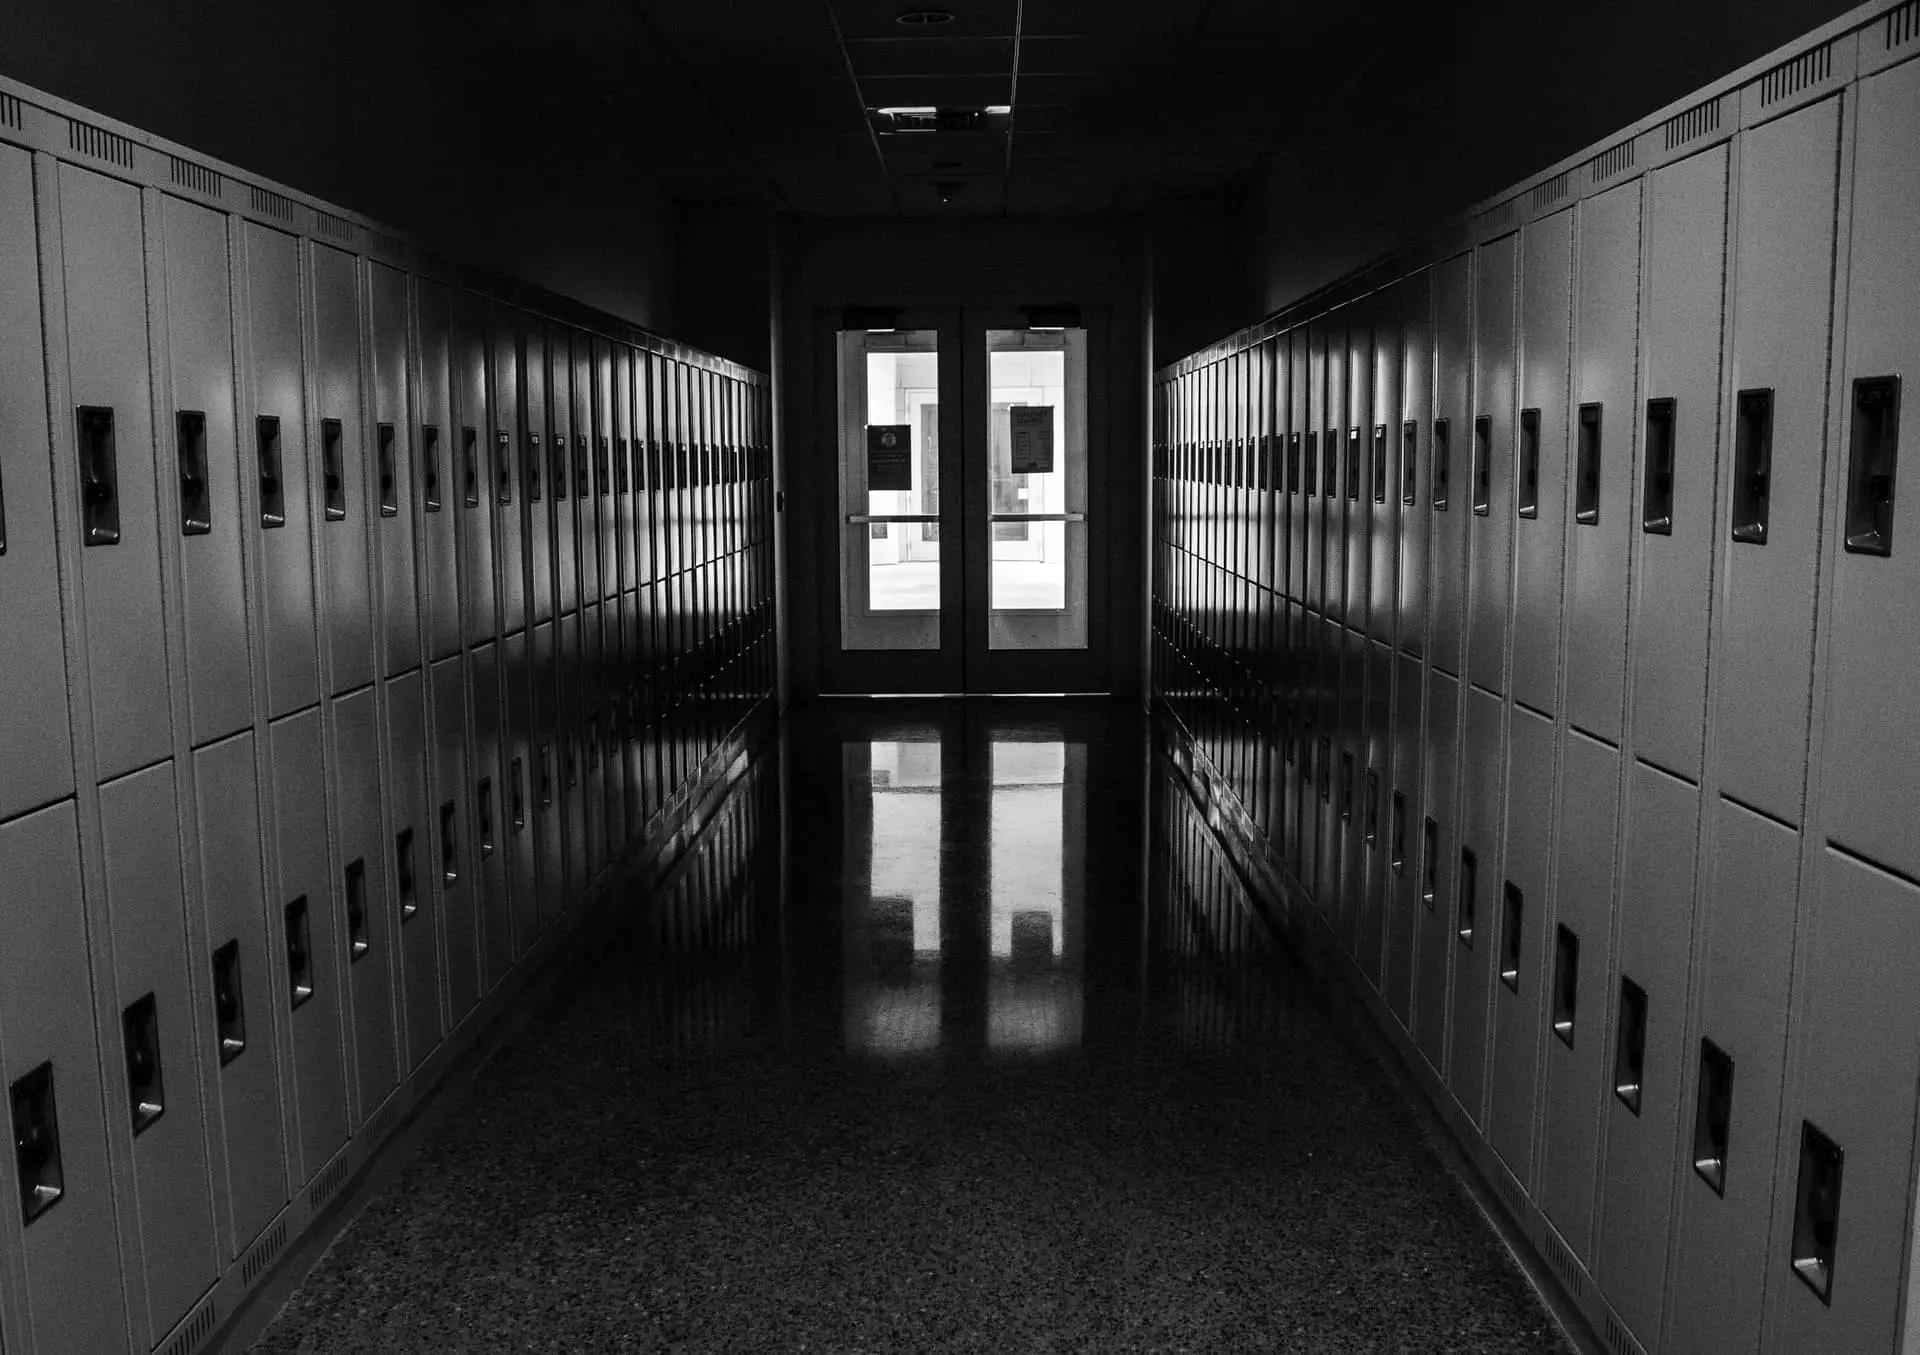 Corridor of lockers